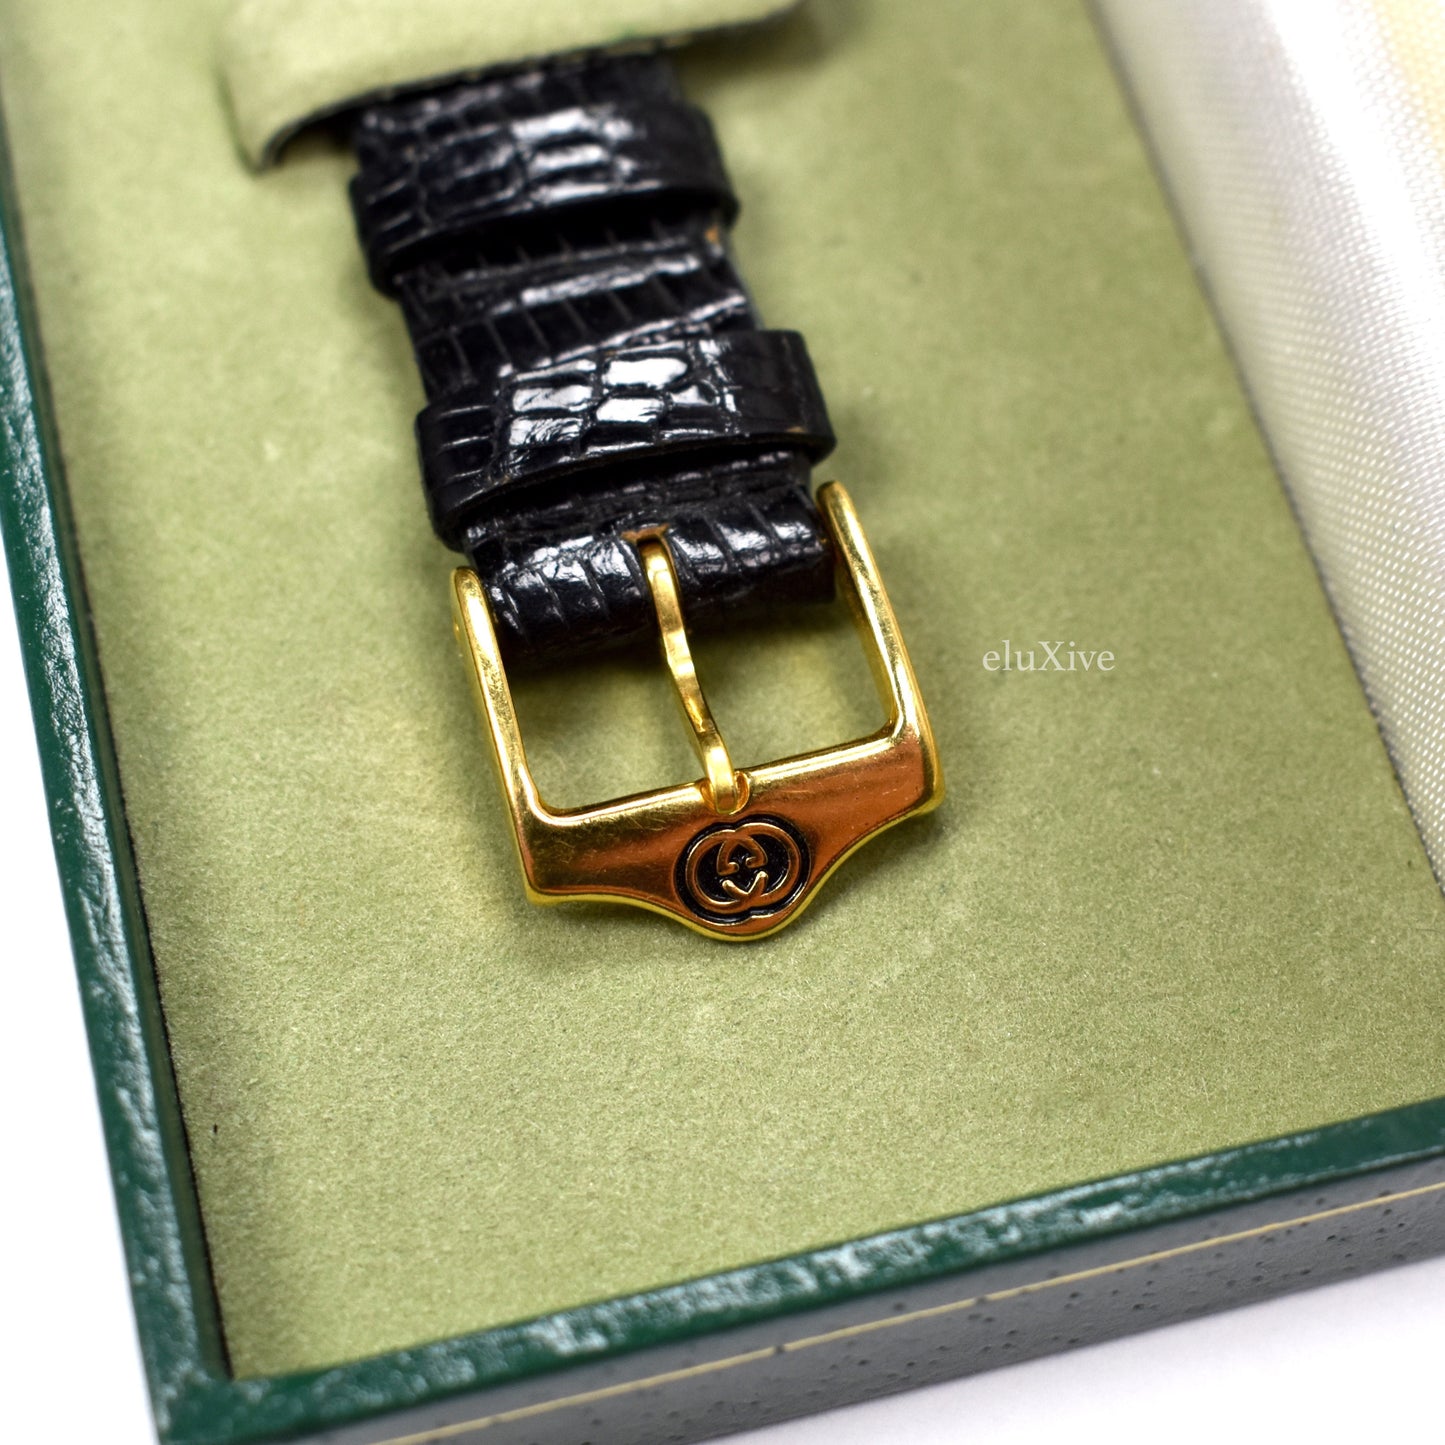 Gucci - Men's 2000M Black Dial Watch